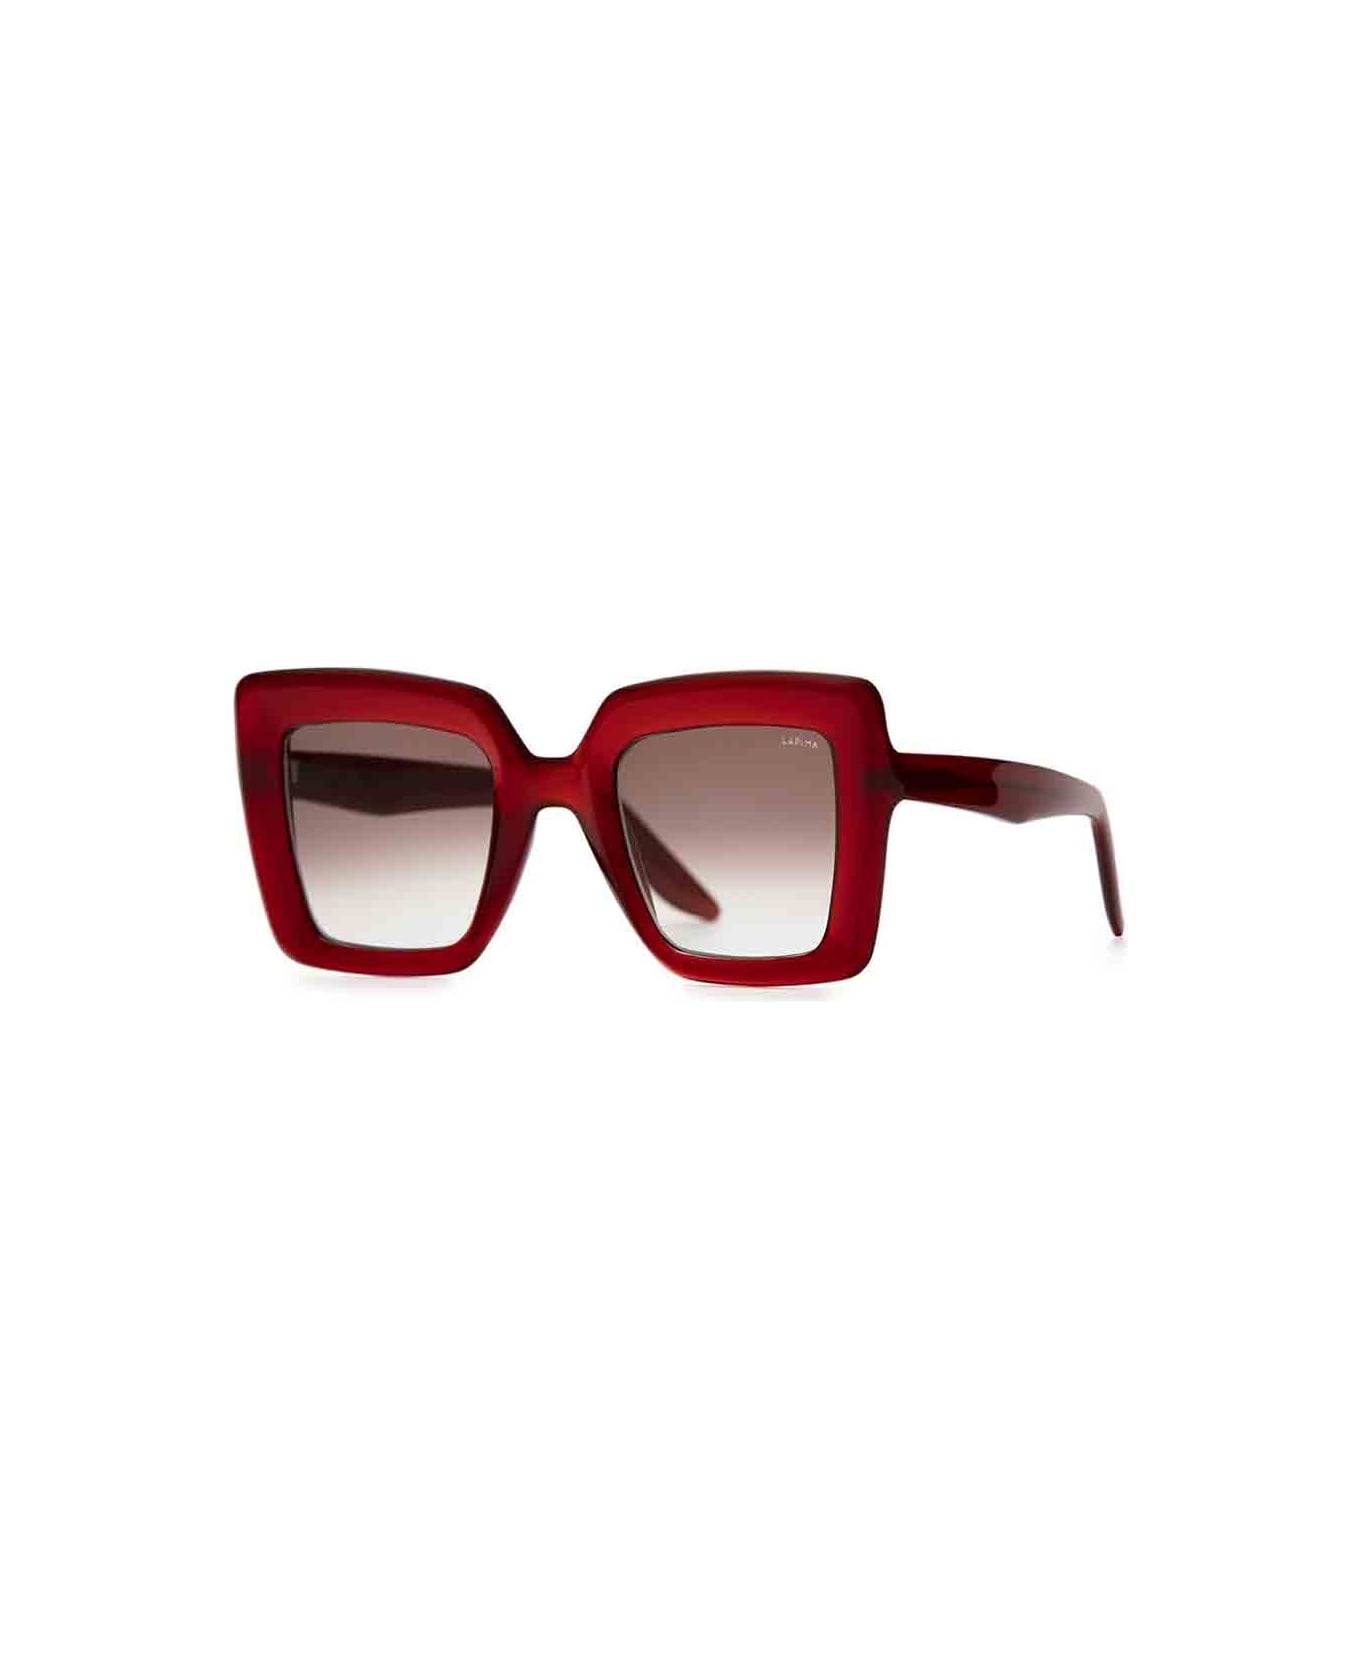 Lapima Eyewear - Rosso/Marrone